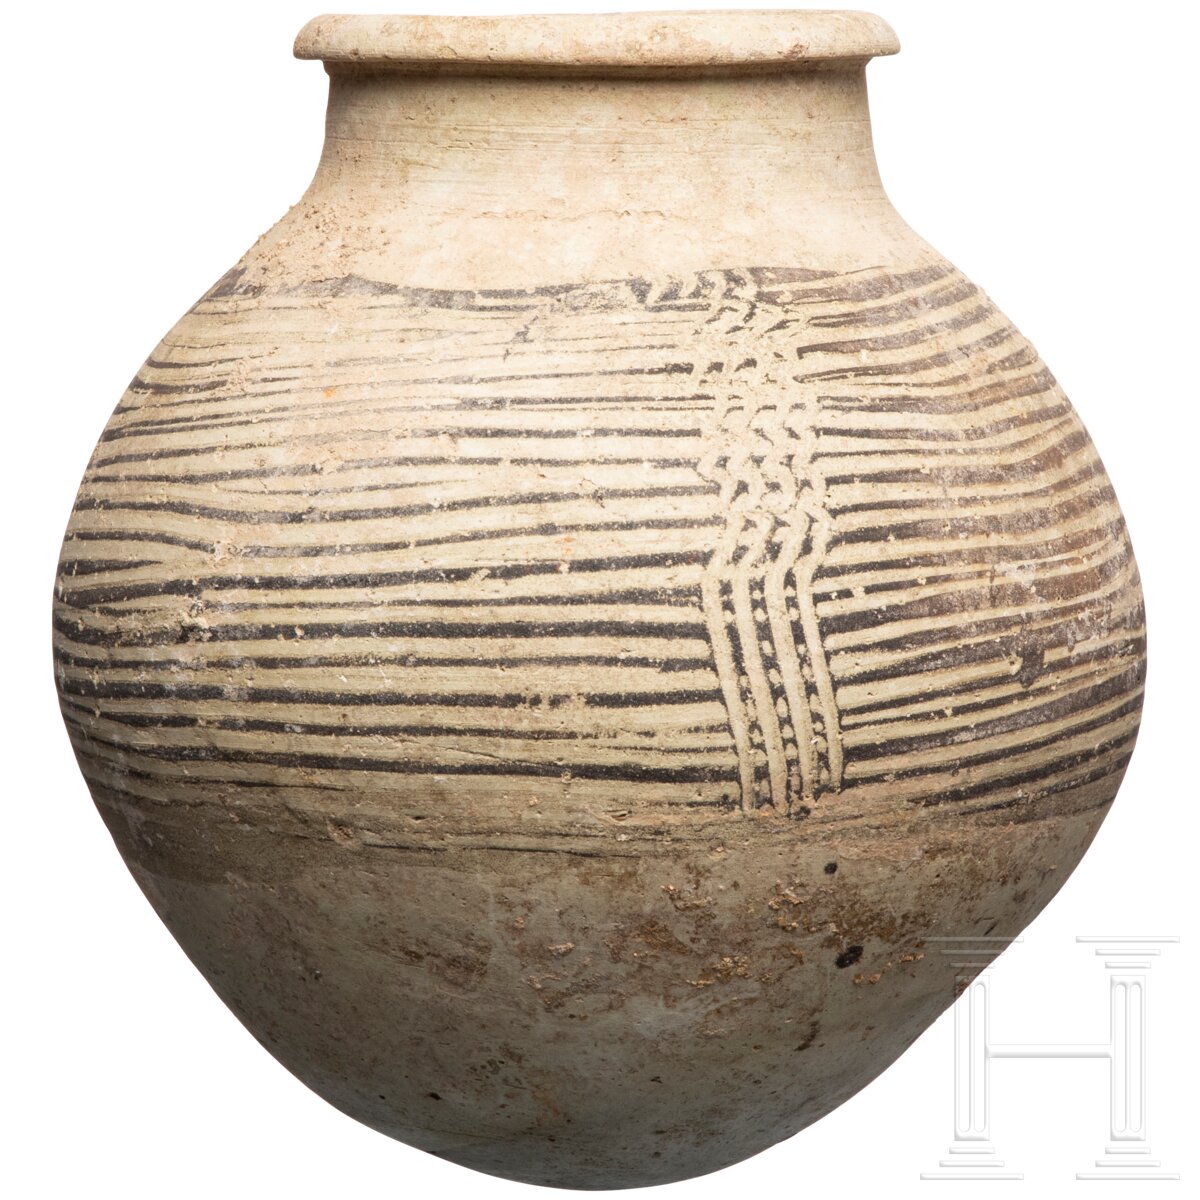 Ovoides Keramikgefäß mit Streifendekor, Khabur-Keramik, Syrien, 1. Hälfte 2. Jtsd. v. Chr. - Image 2 of 2